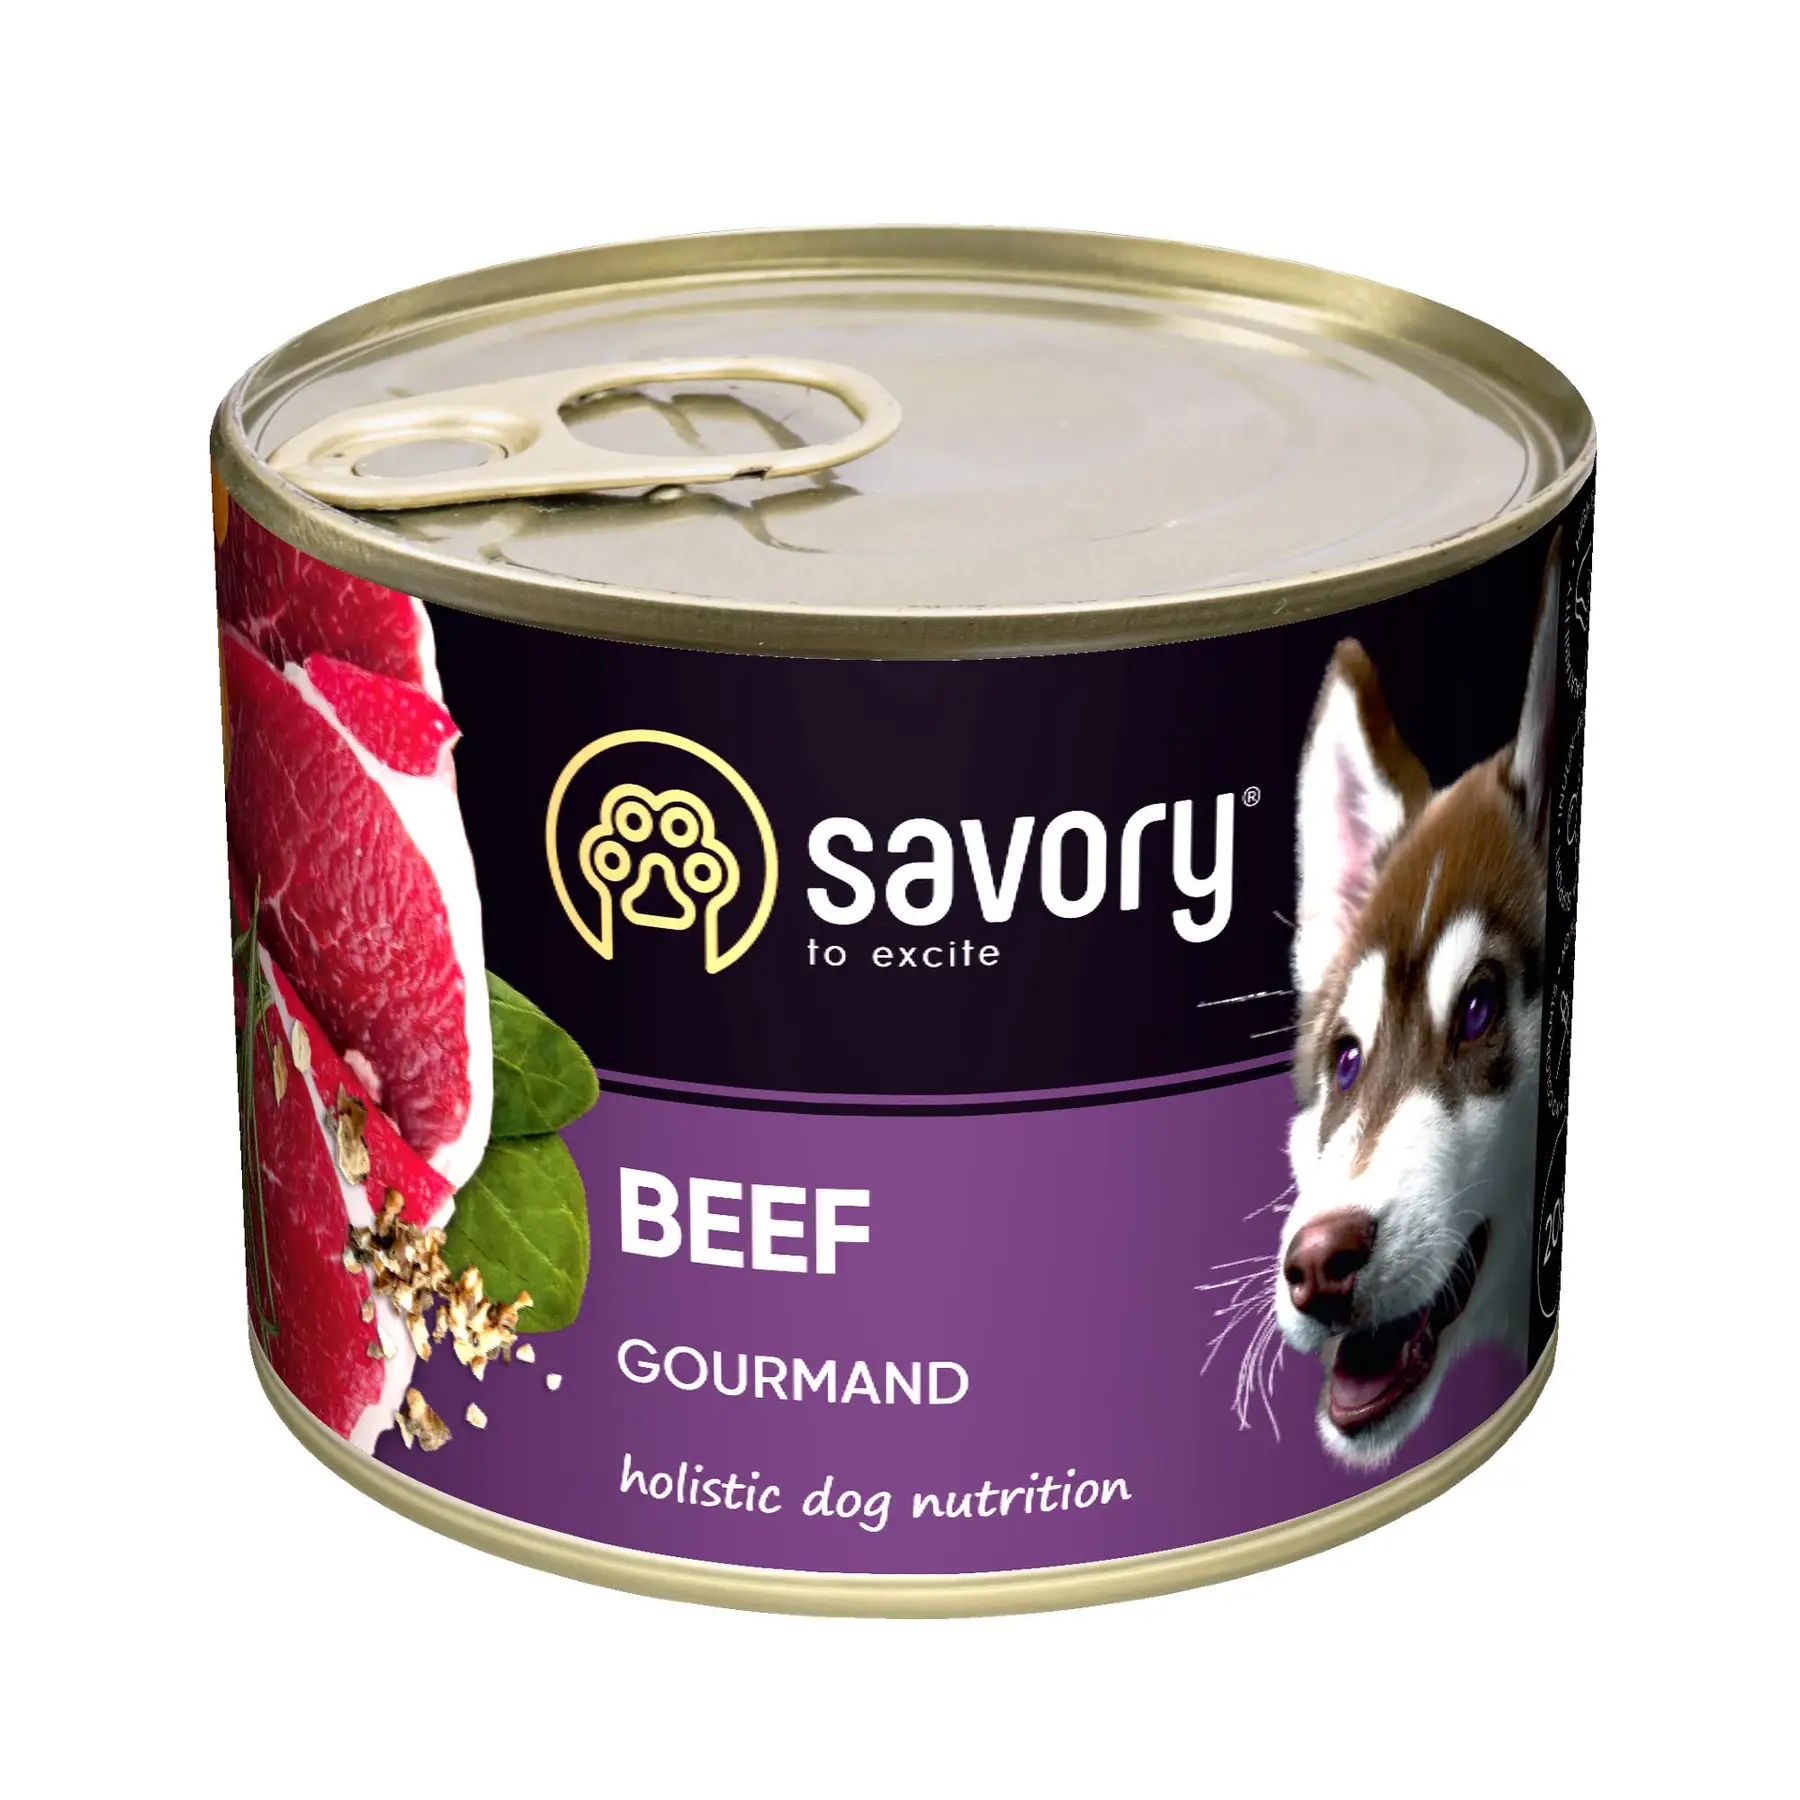 Вологий корм для собак Savory Gourmand Beef